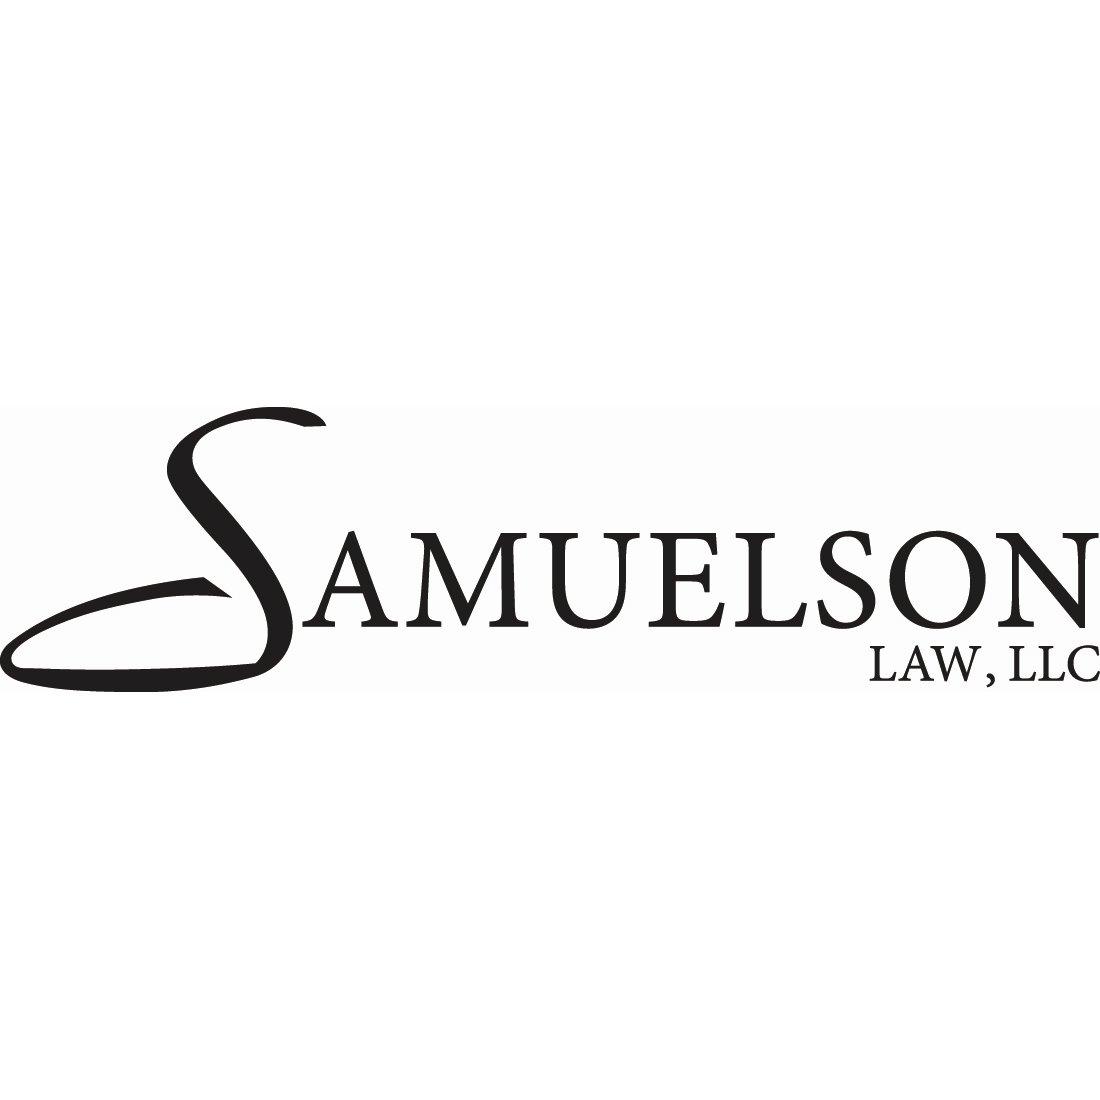 Samuelson Law, LLC Logo